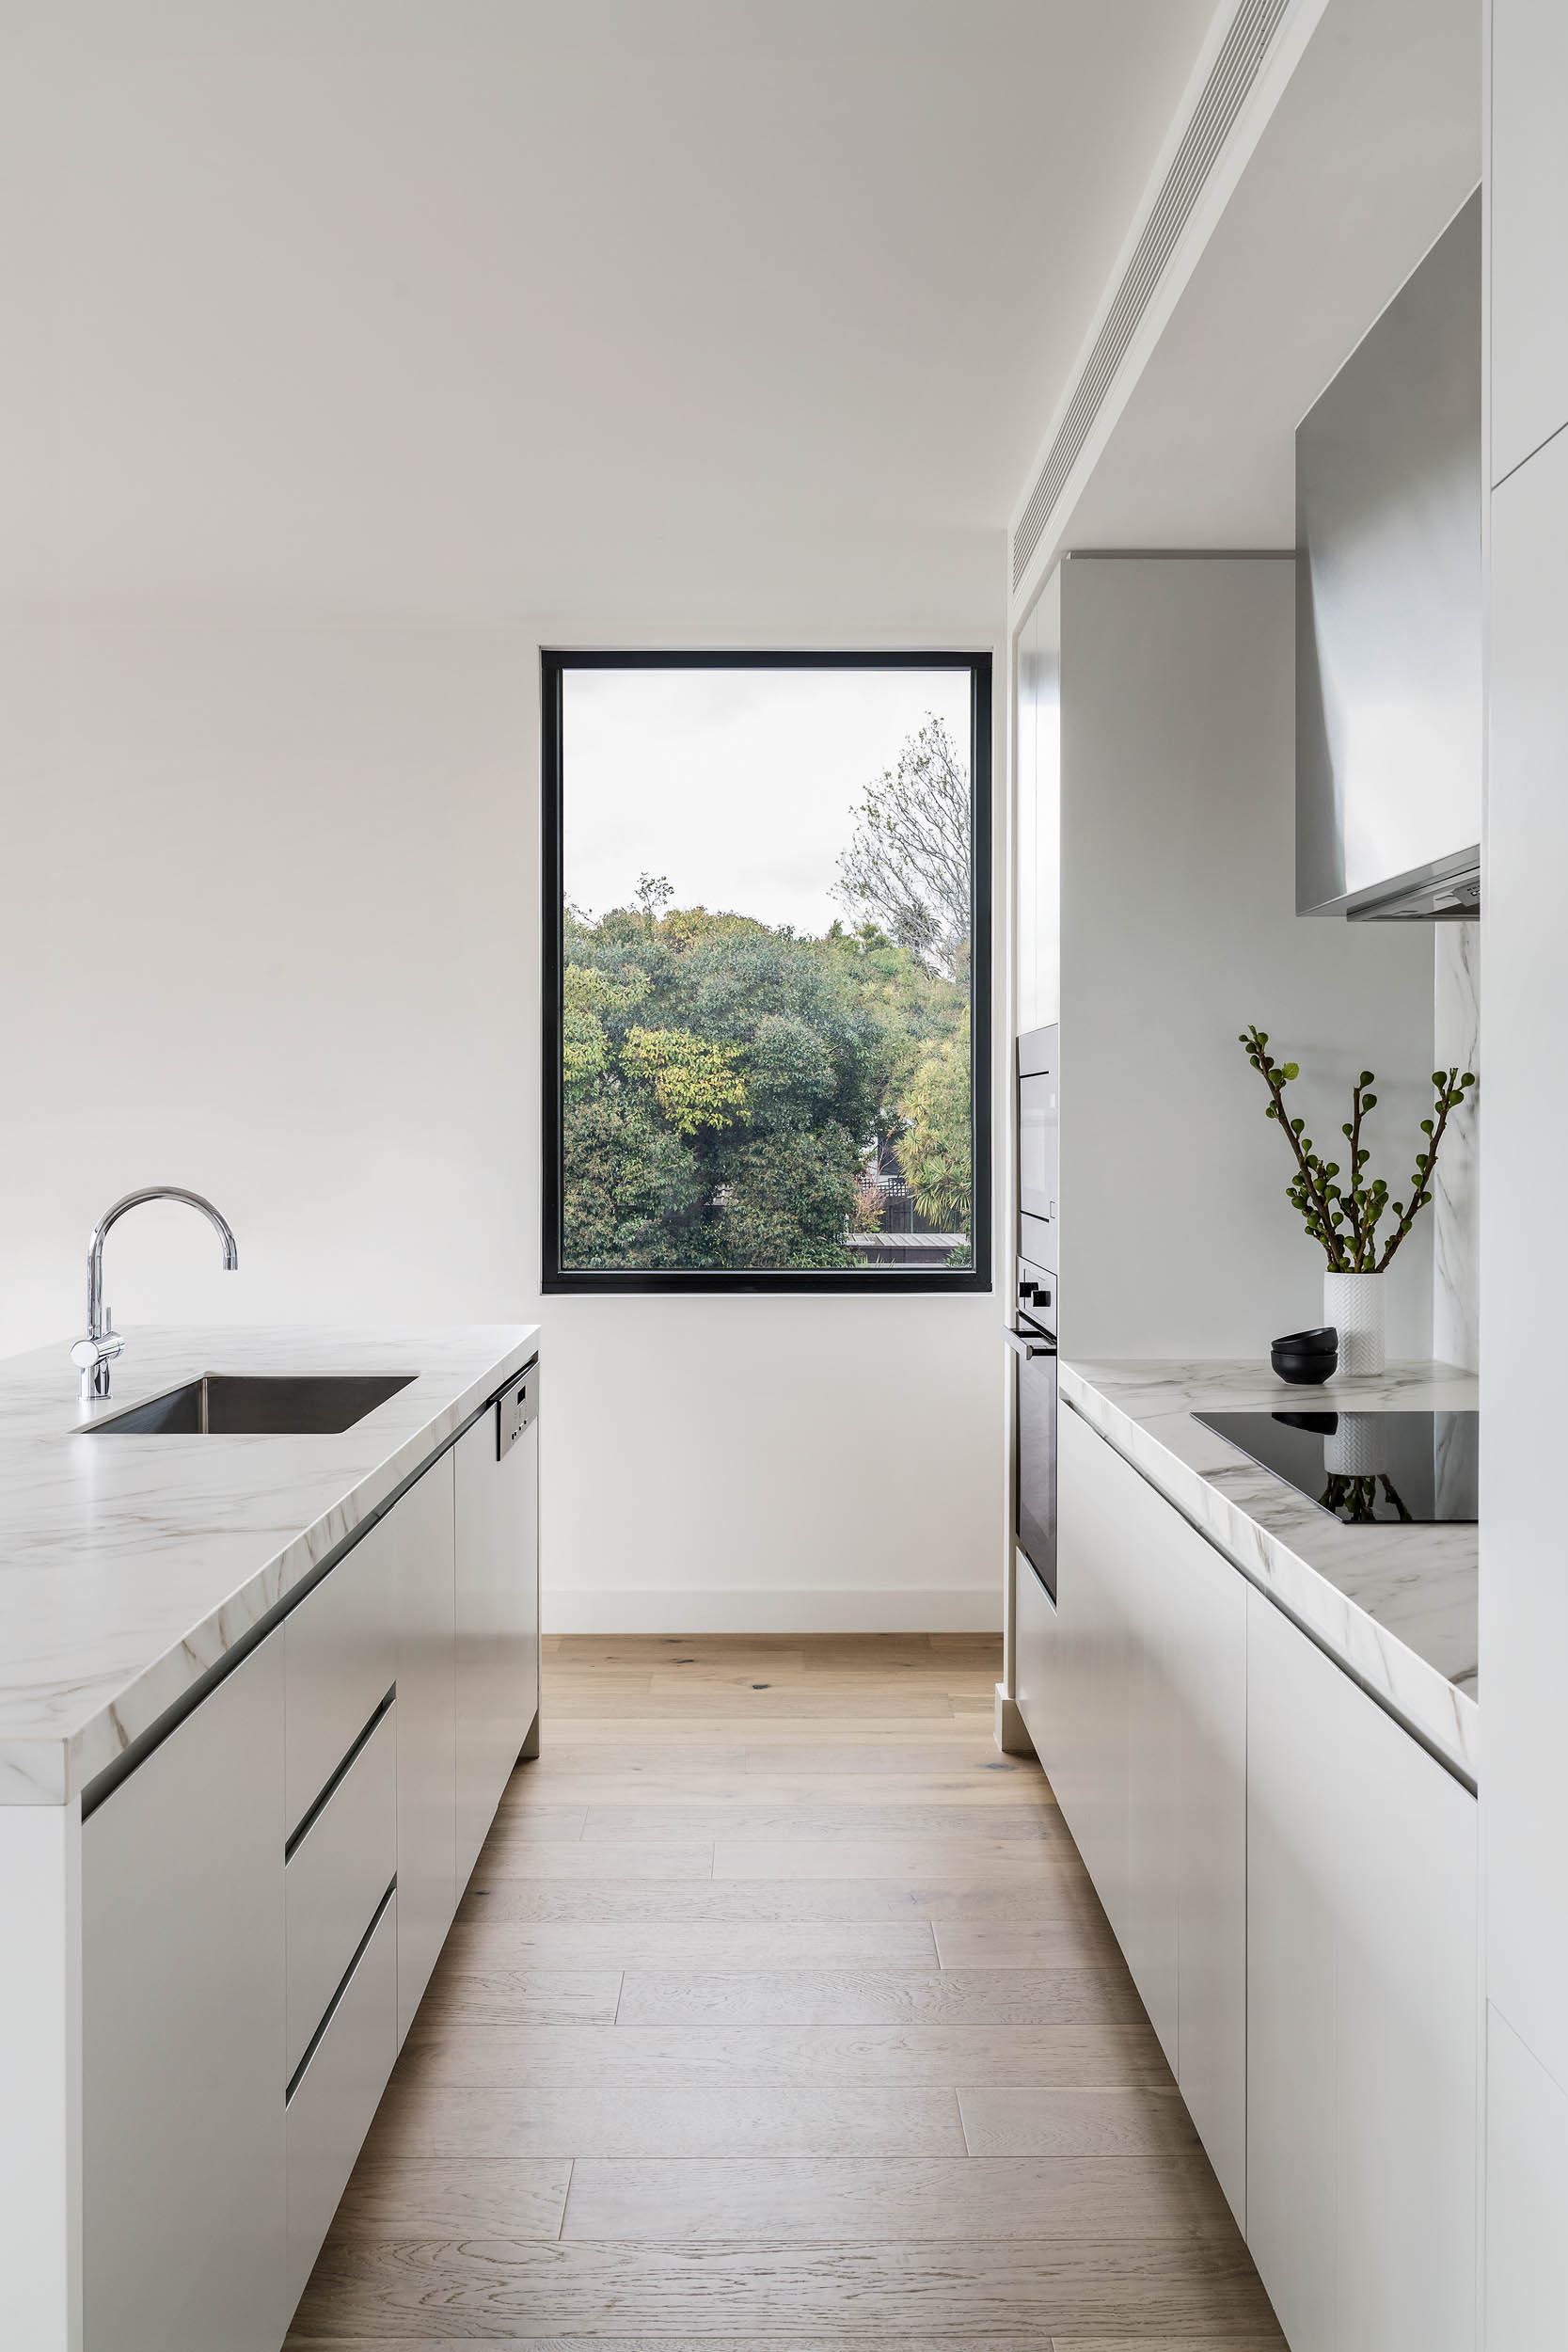 penthouse-kitchen-window-outlook-interior-kew-multi-residential-development-ckairouz-architects